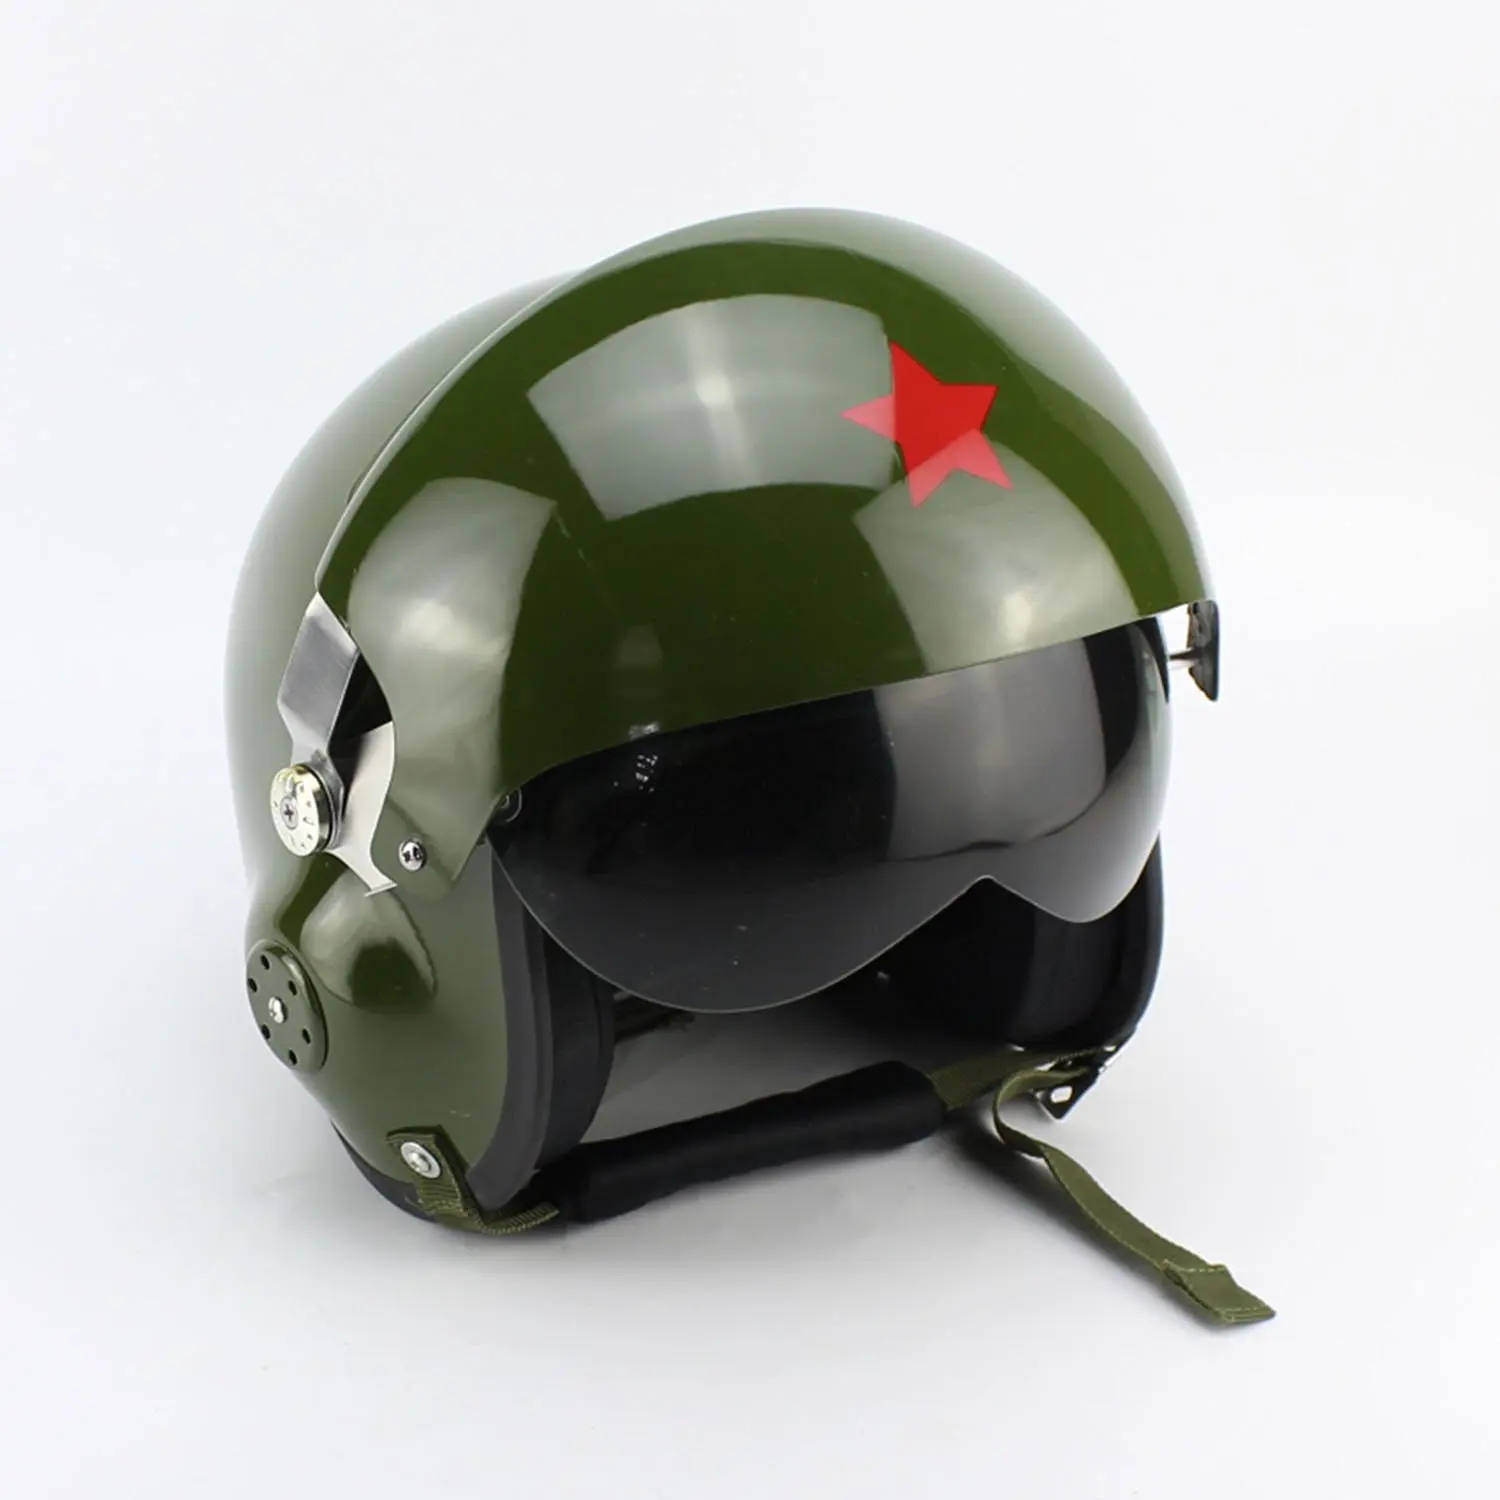 Buy Double Mirror Air Force Jet Pilot Flight Motorcycle Helmet with Detachable Visor White in